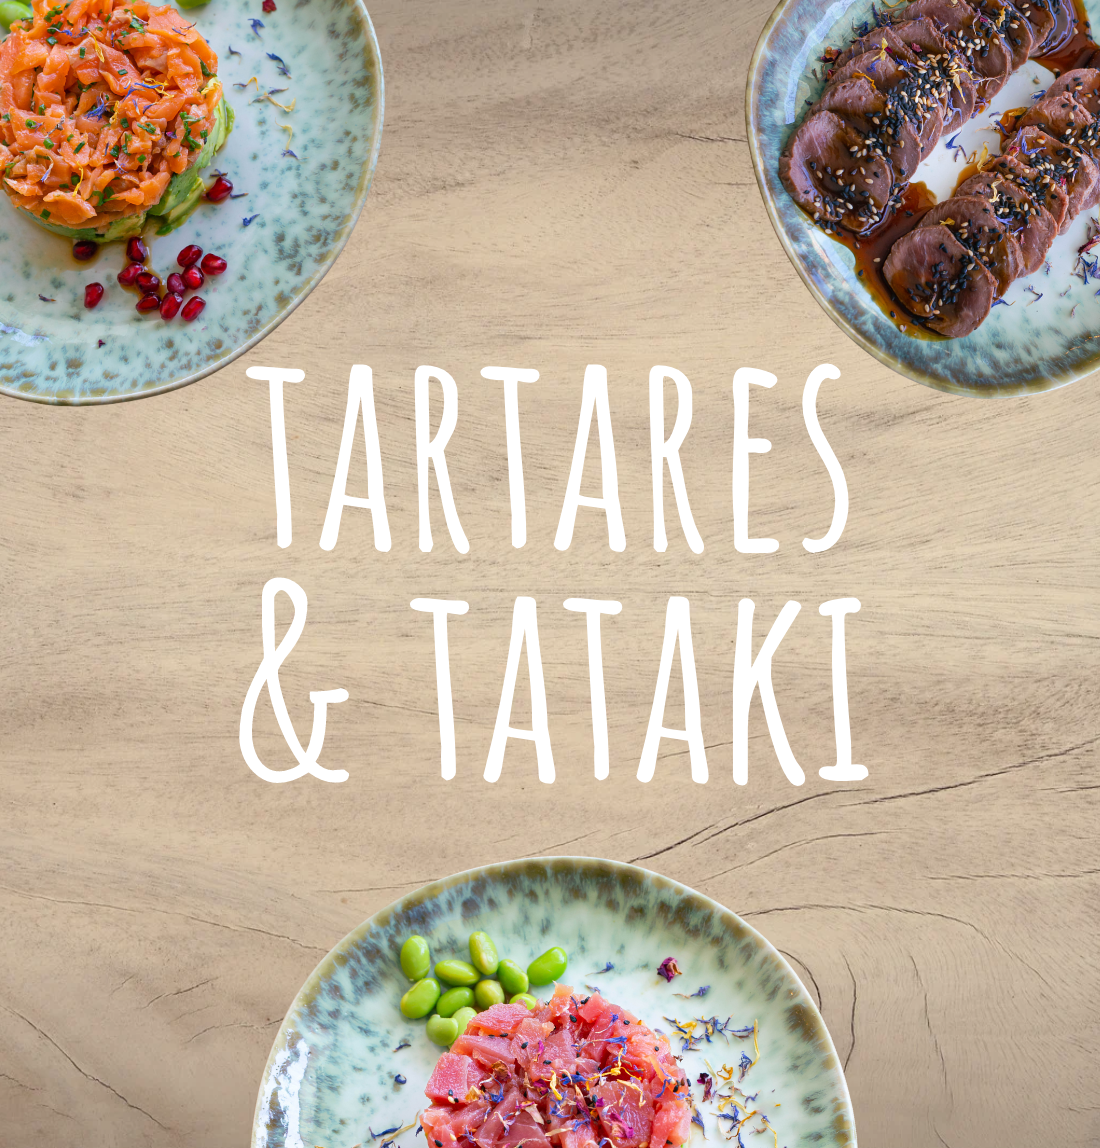 Tartares et tataki